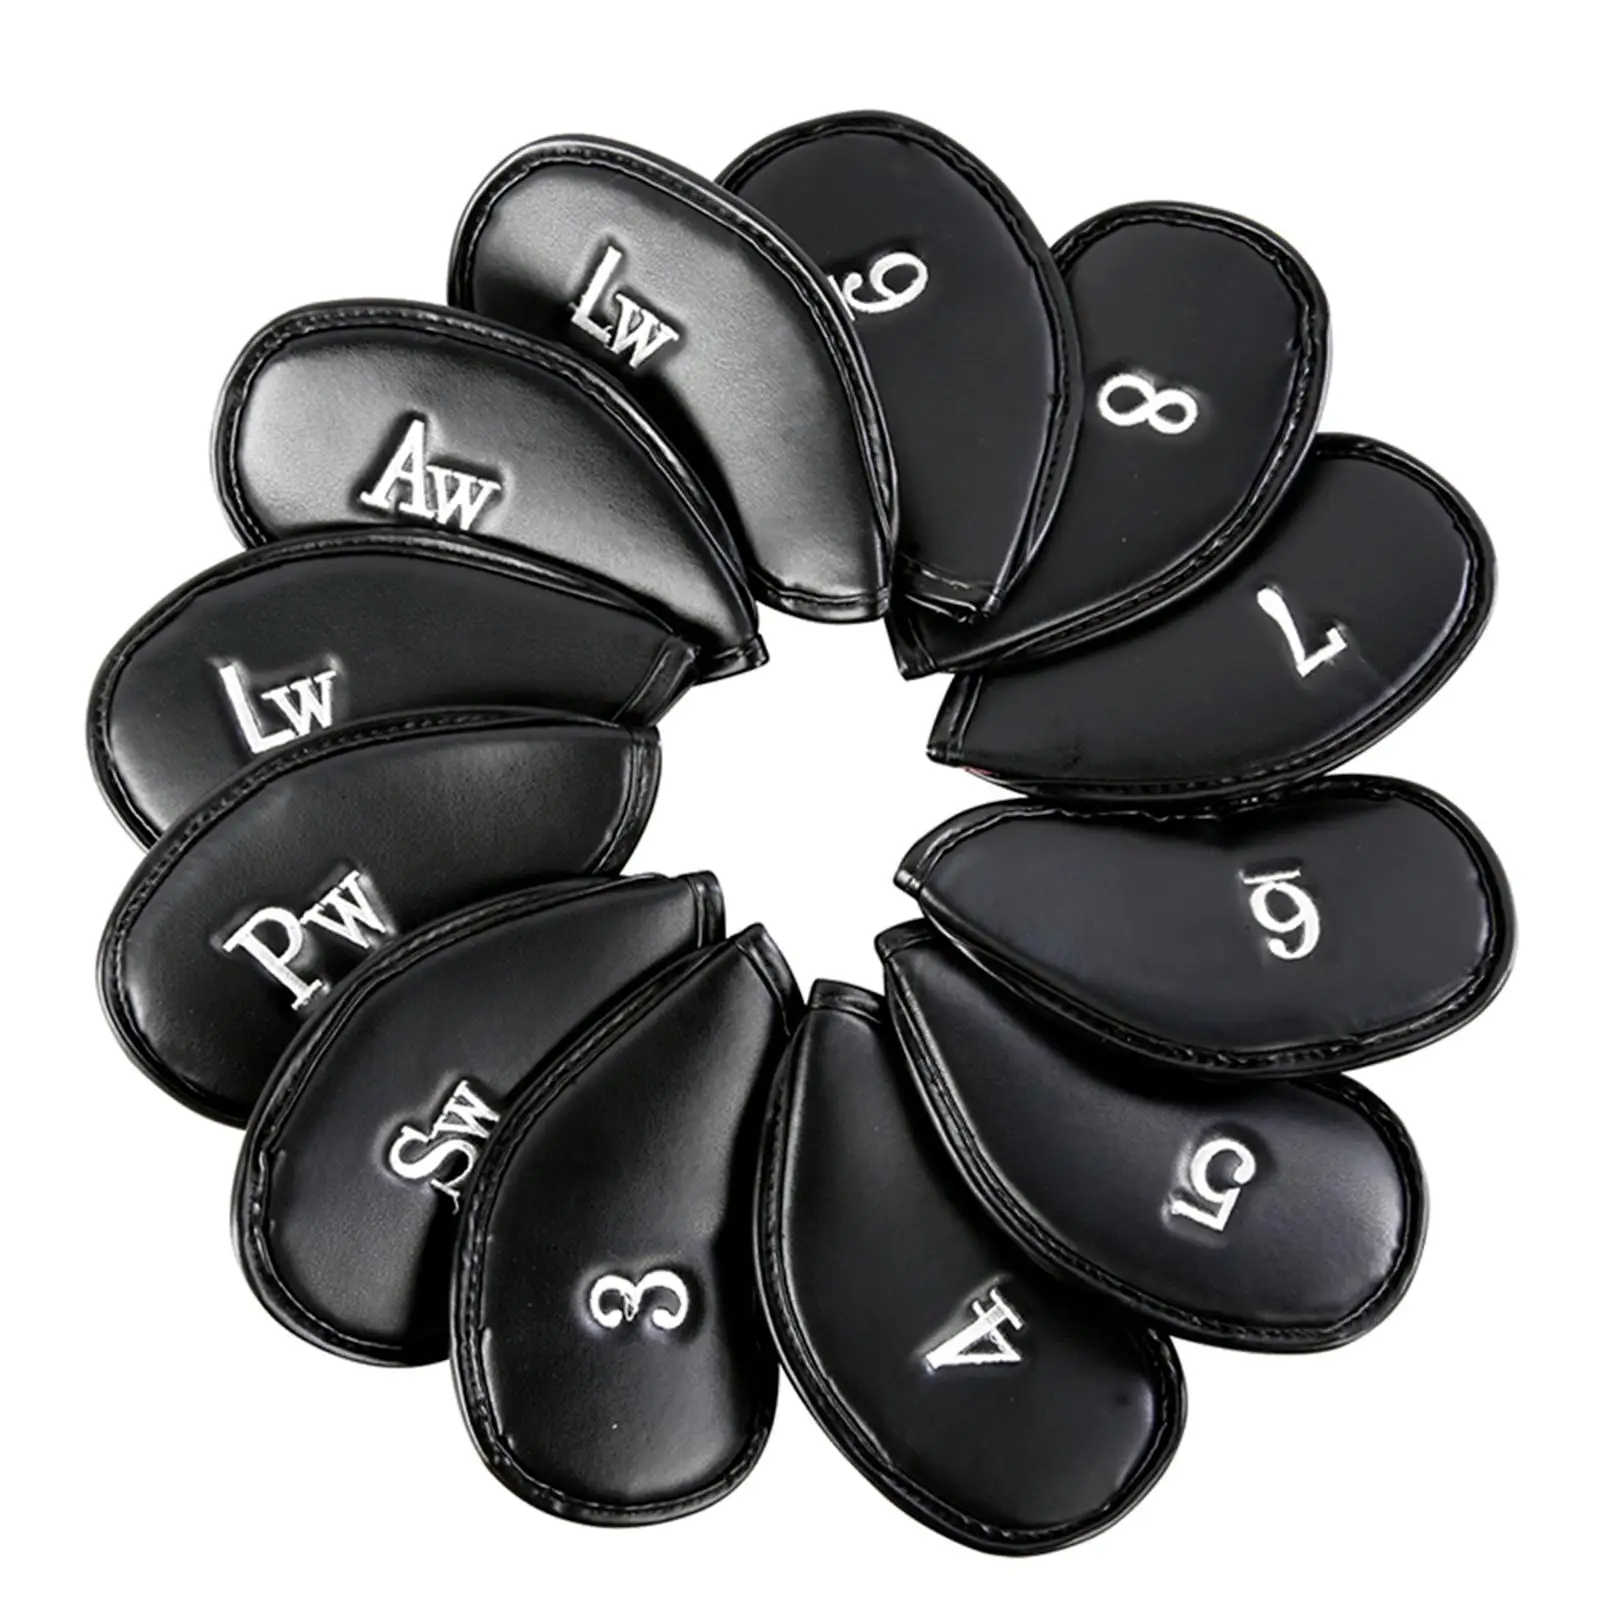 

12Pcs Golf Iron Headcover Set Premium PU Leather Golf Club Head Covers 3,4,5,6,7,8,9,A,S,P,L,L